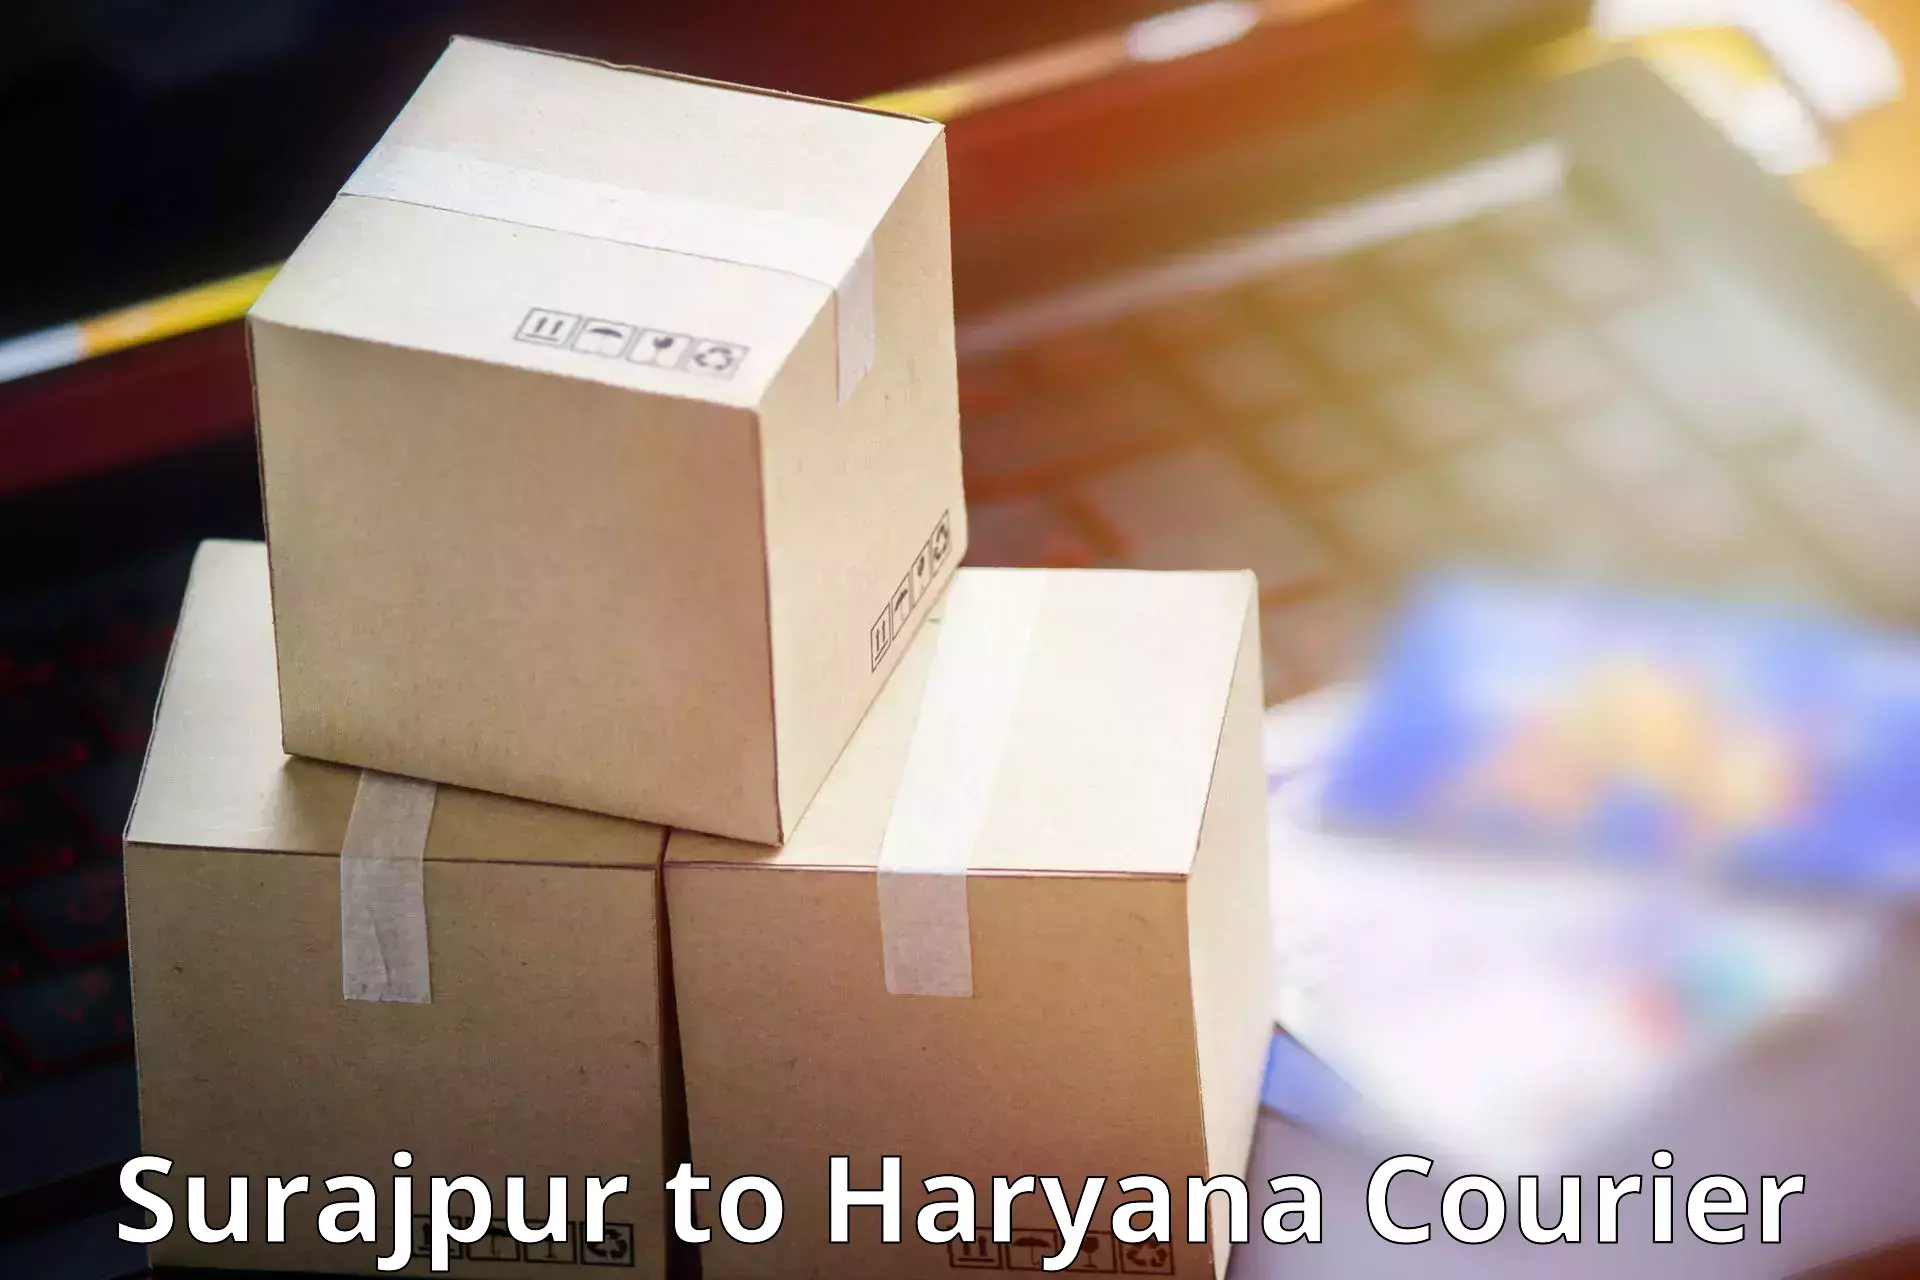 Courier service comparison Surajpur to Kurukshetra University